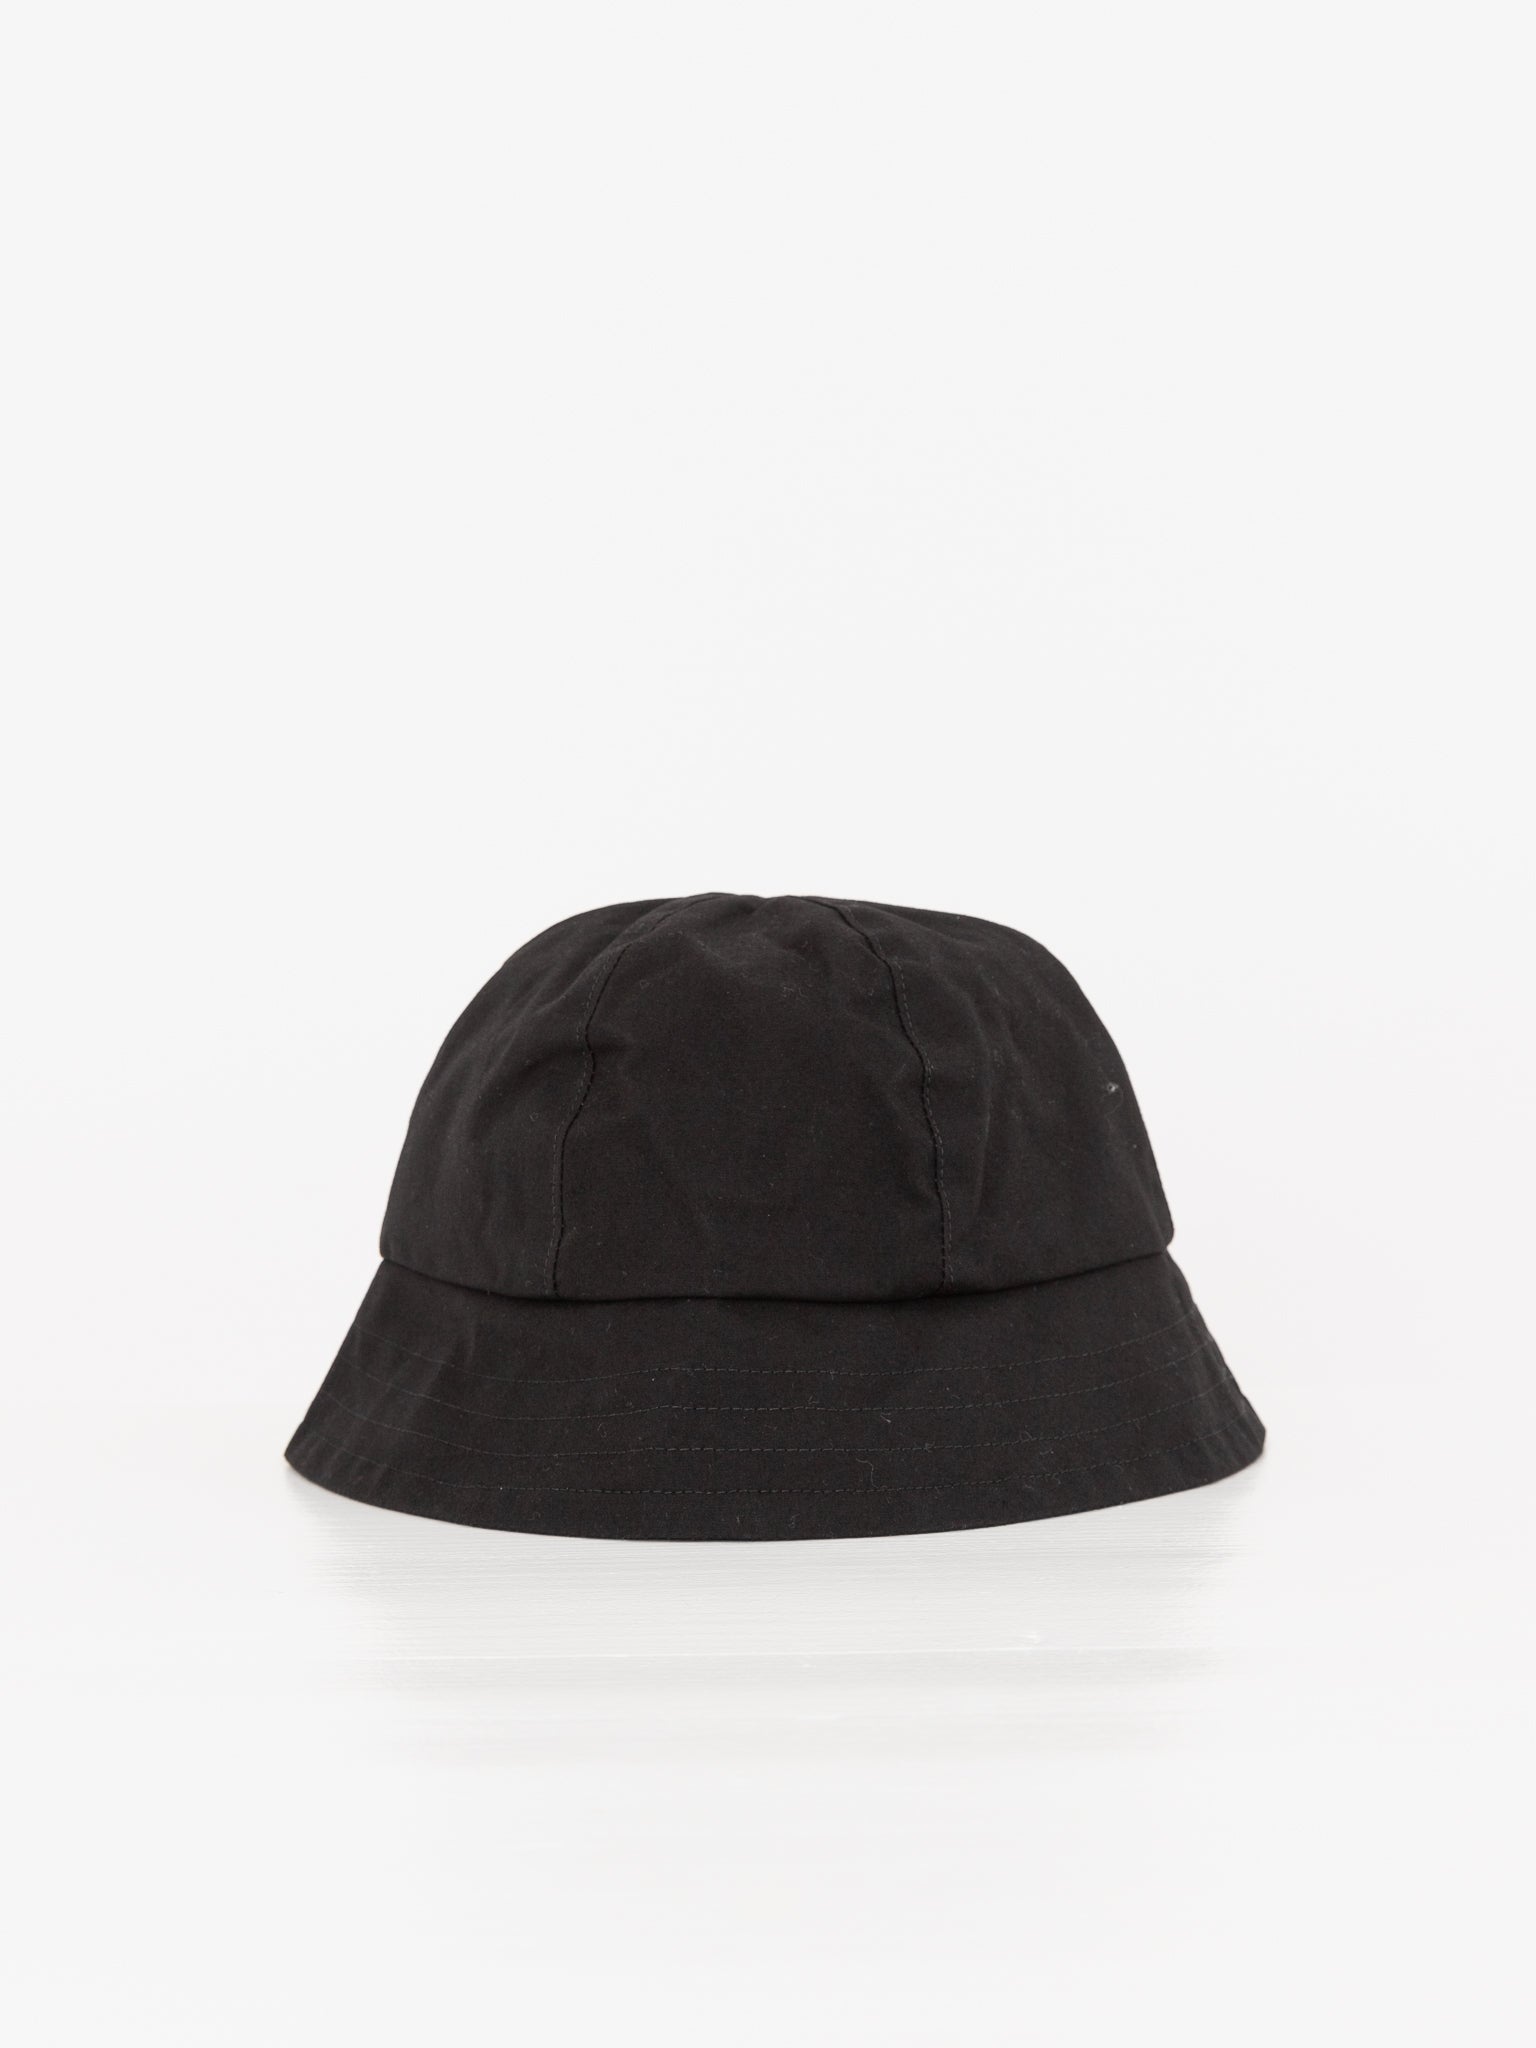 Studio Kettle Deck Hat, Black - Worthwhile